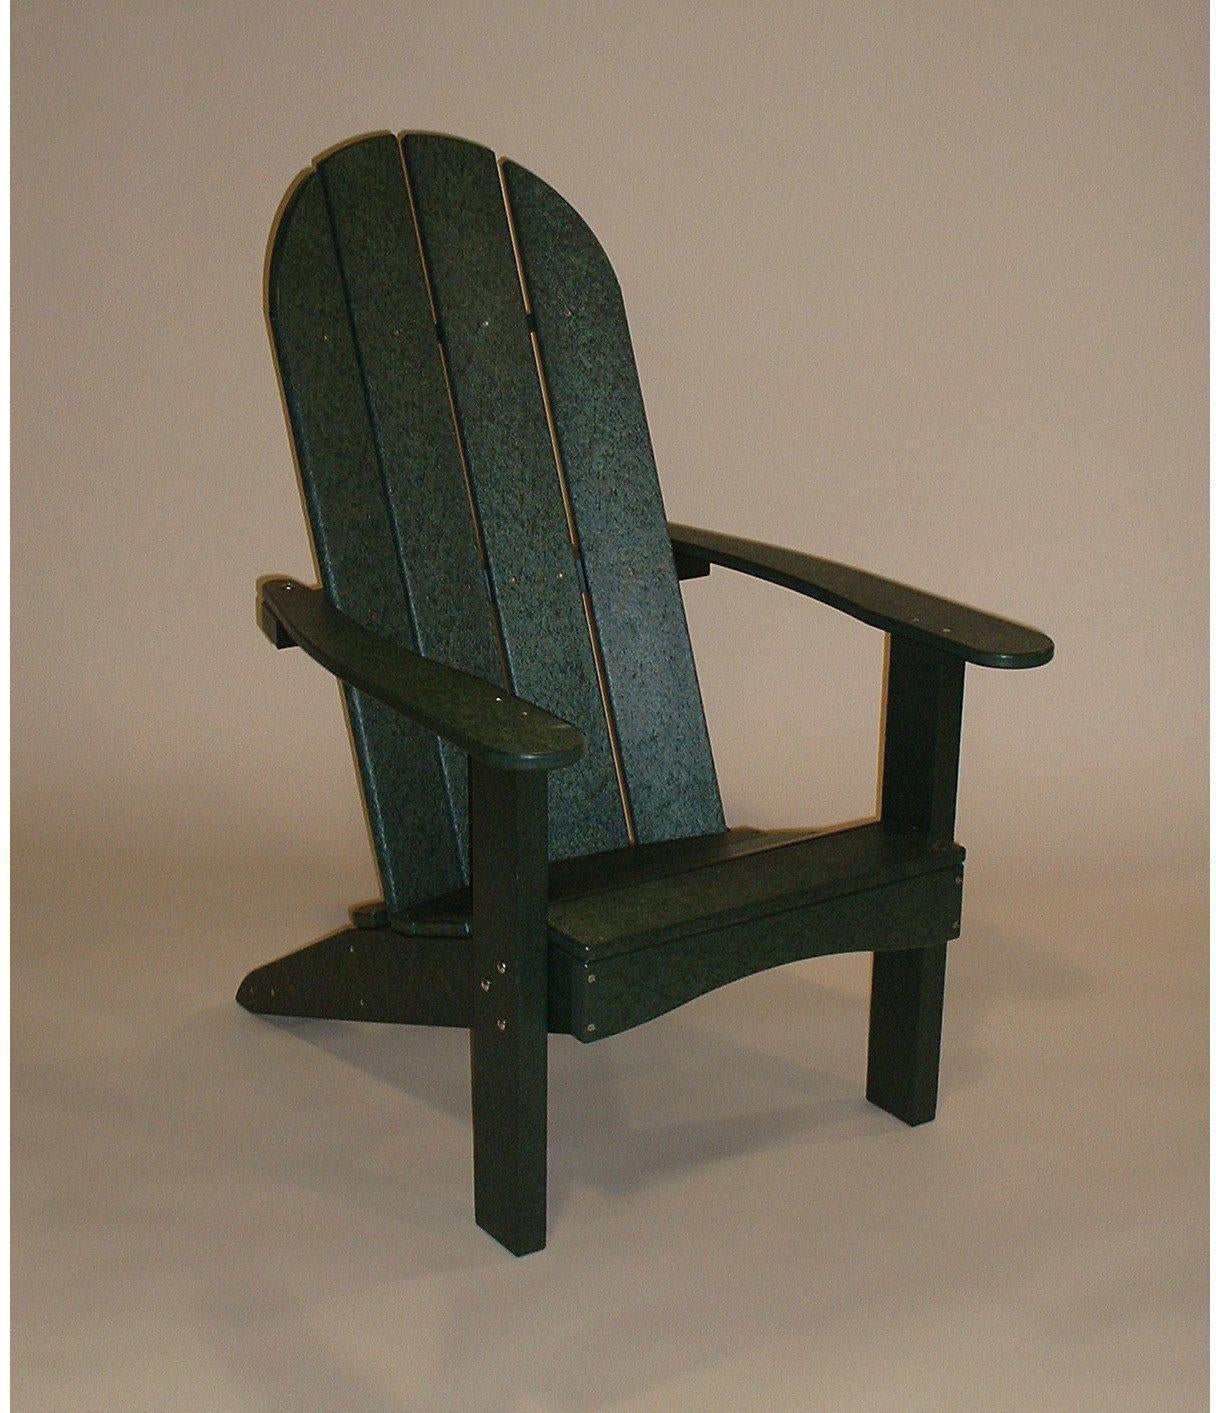 Tailwind Furniture Recycled Plastic Round Back Adirondack Chair - Rocking Furniture